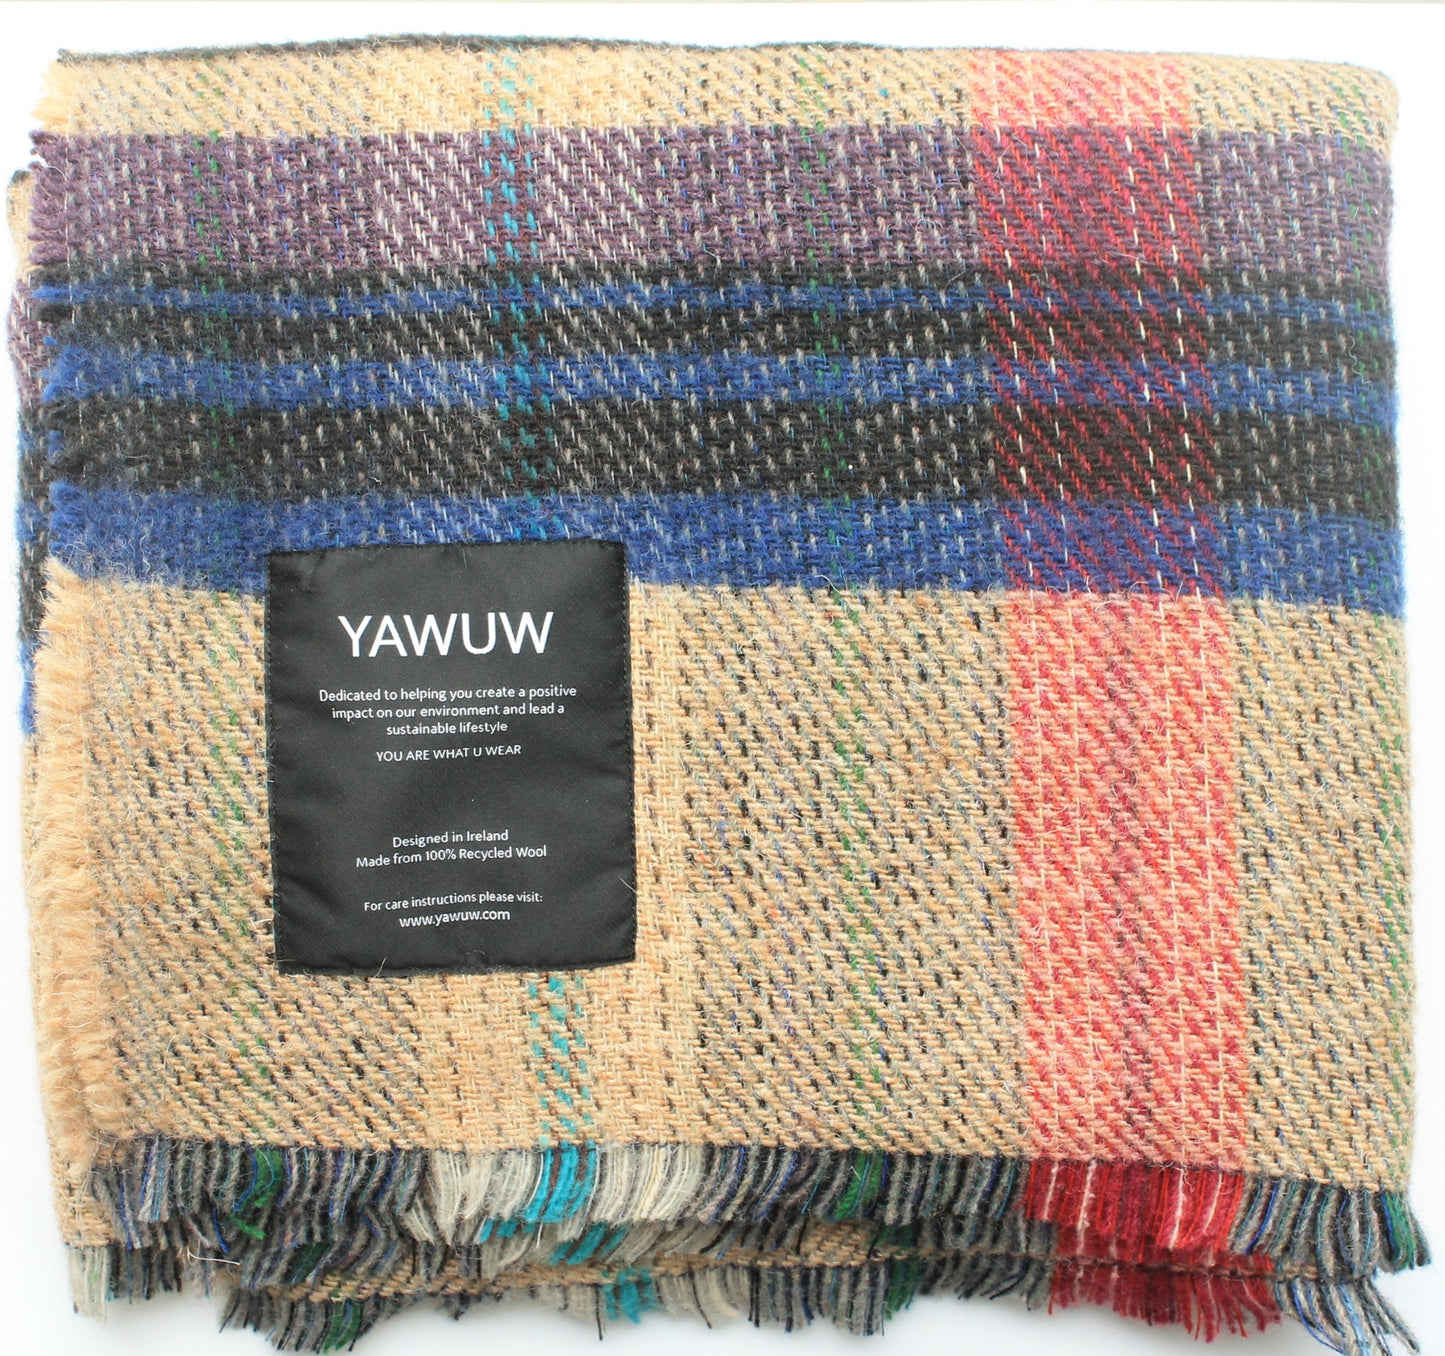 100% Recycled Wool Throw - YAWUW